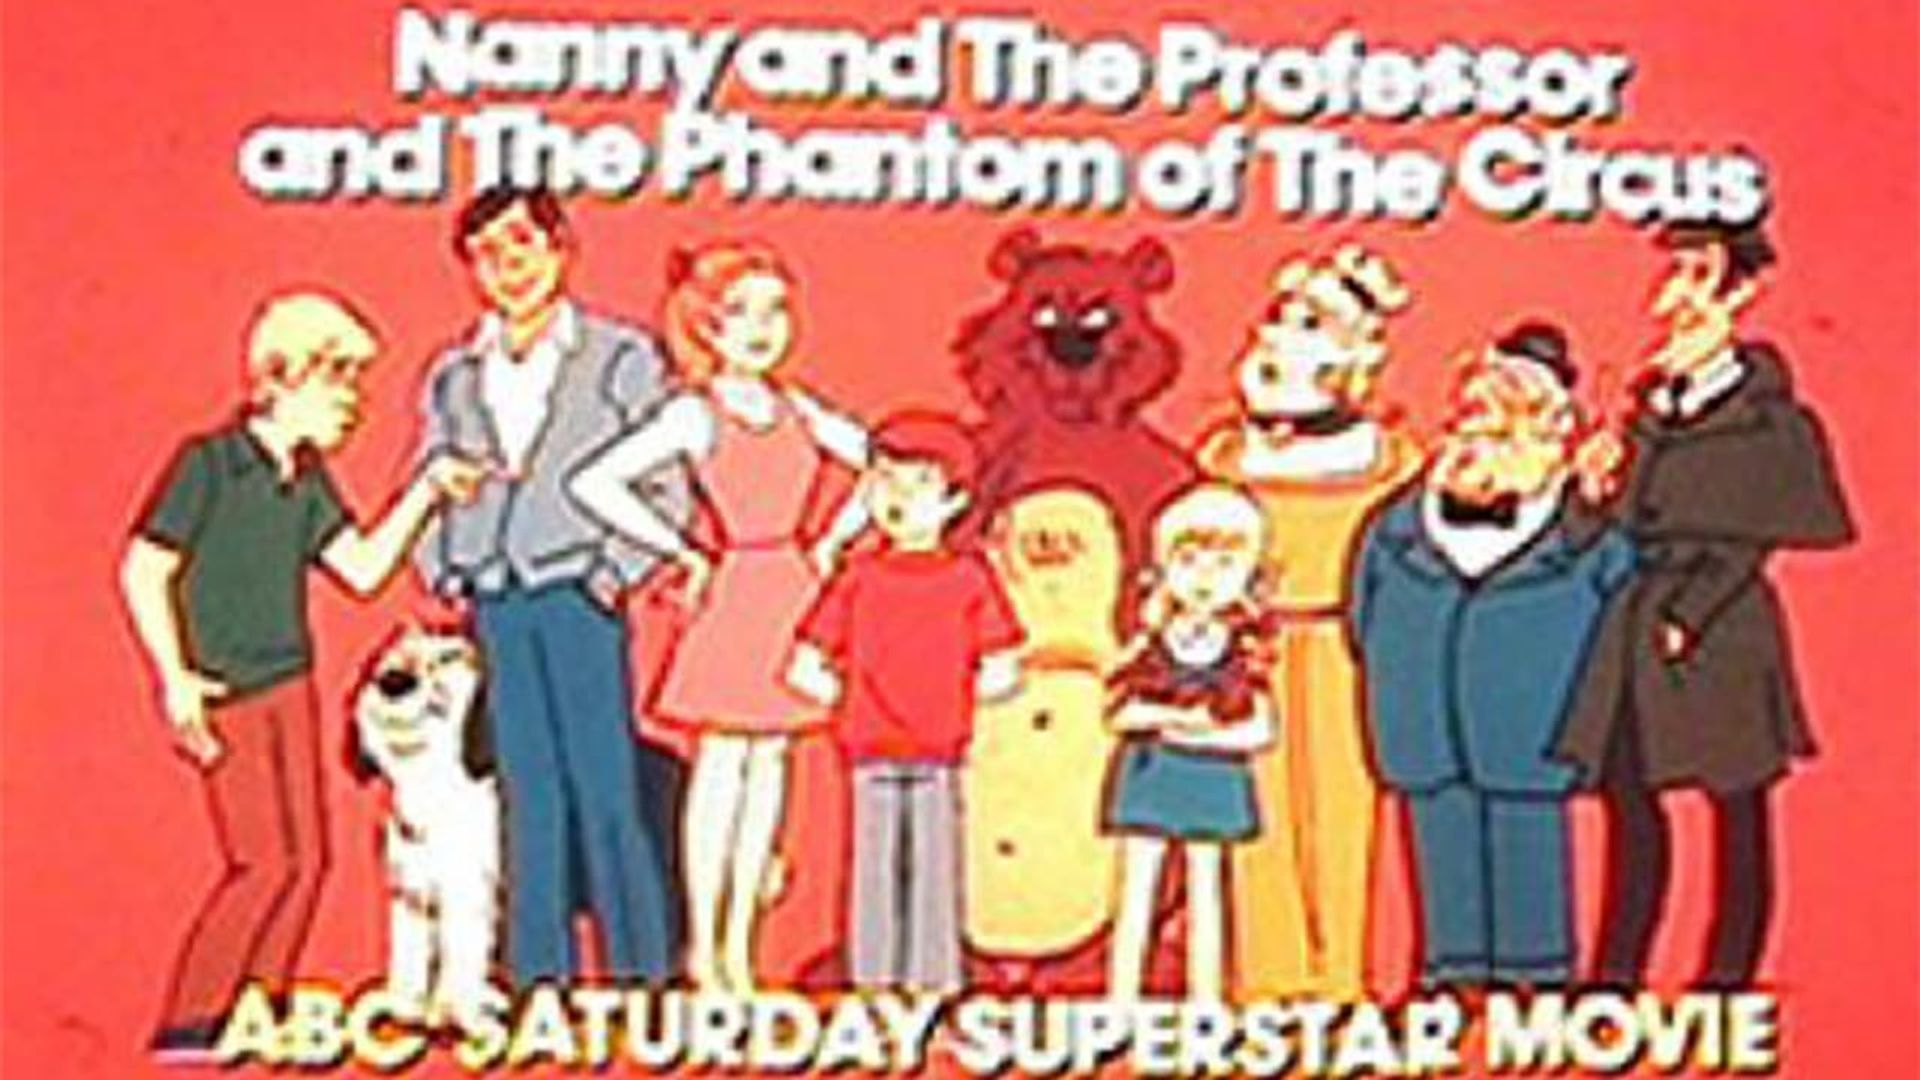 The ABC Saturday Superstar Movie background